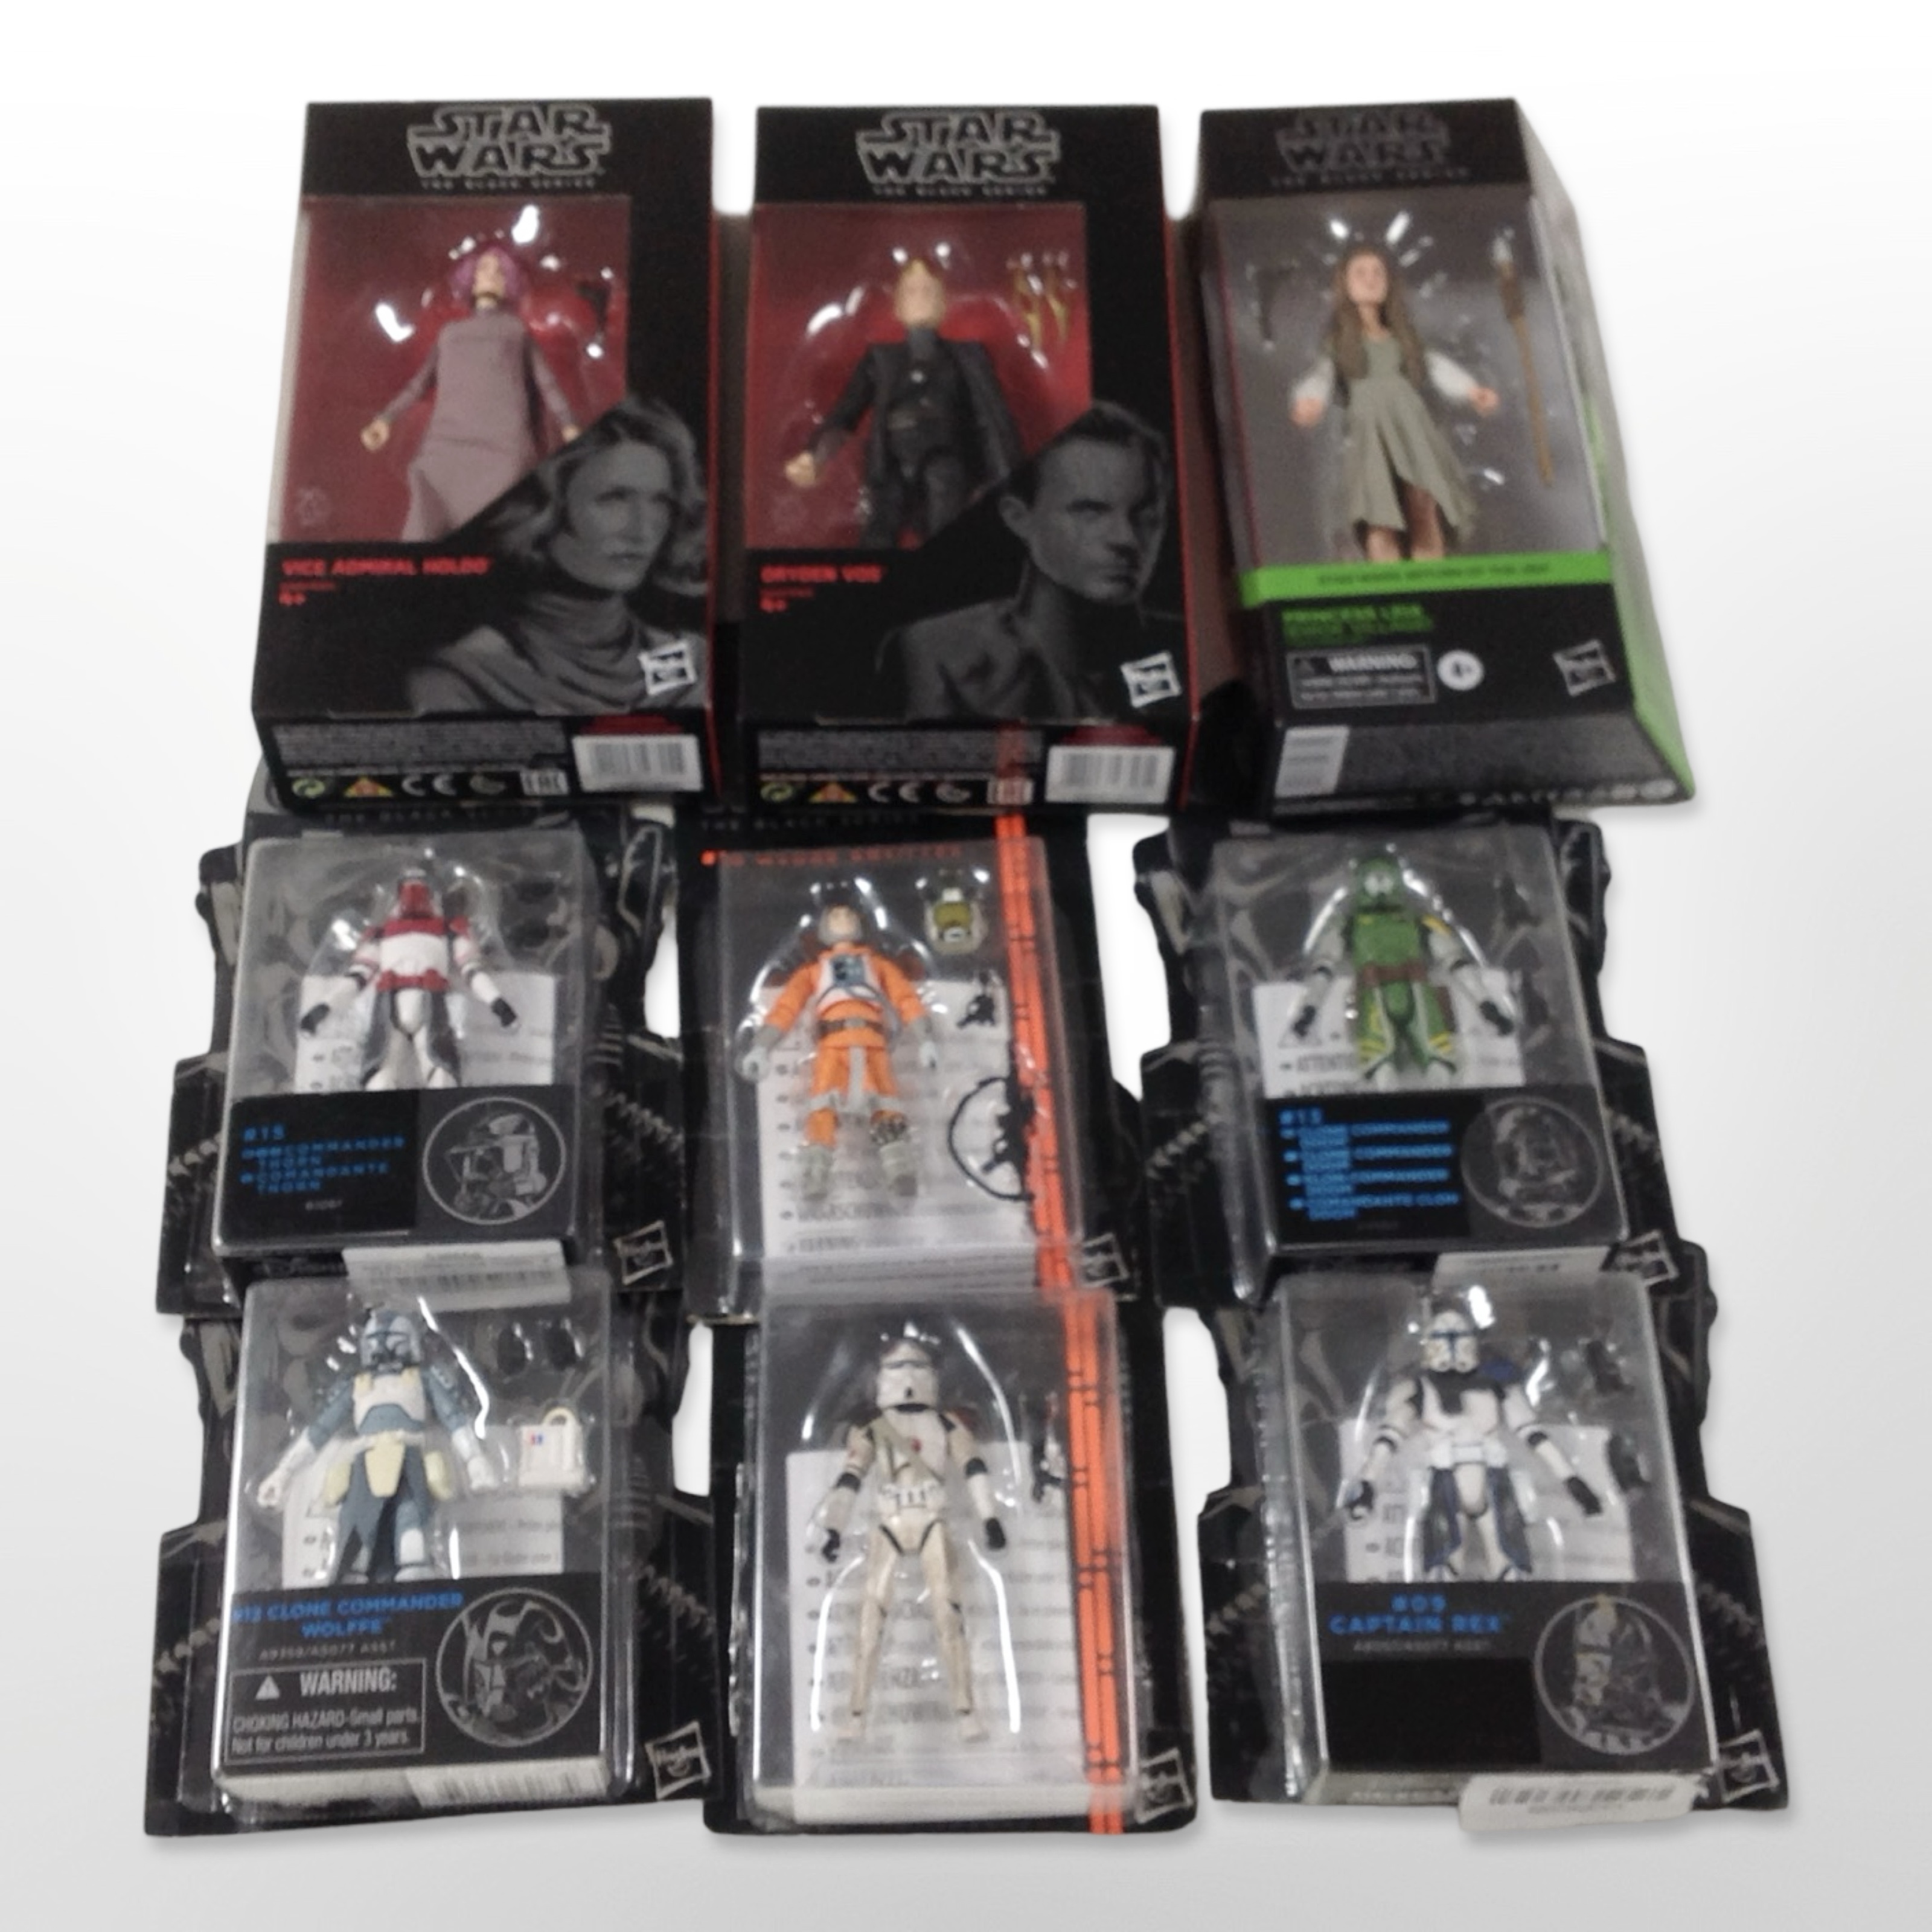 Nine Hasbro Star Wars The Black Series figurines, boxed.